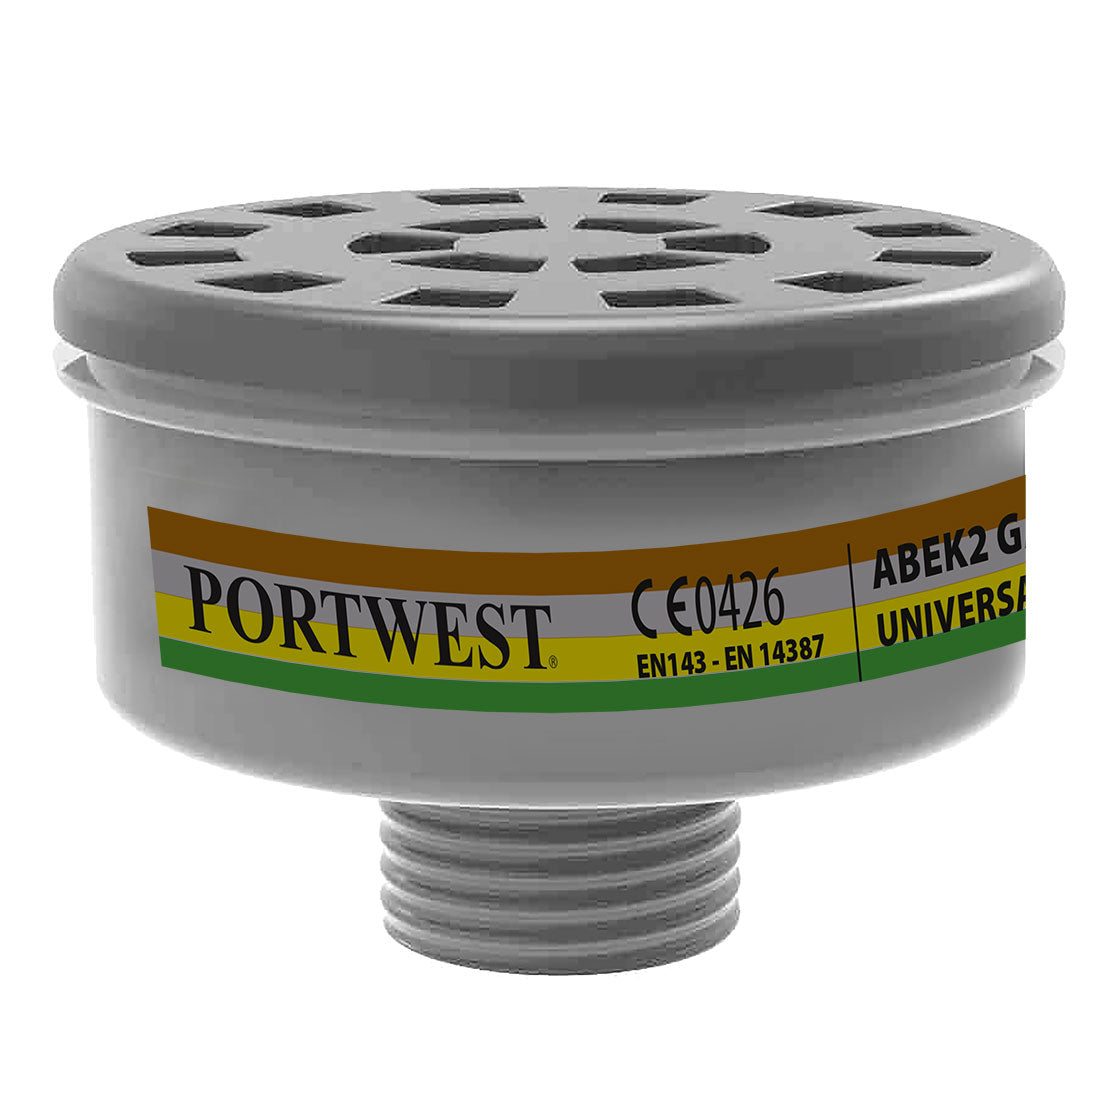 Portwest ABEK2 Gas Filter Universal Thread